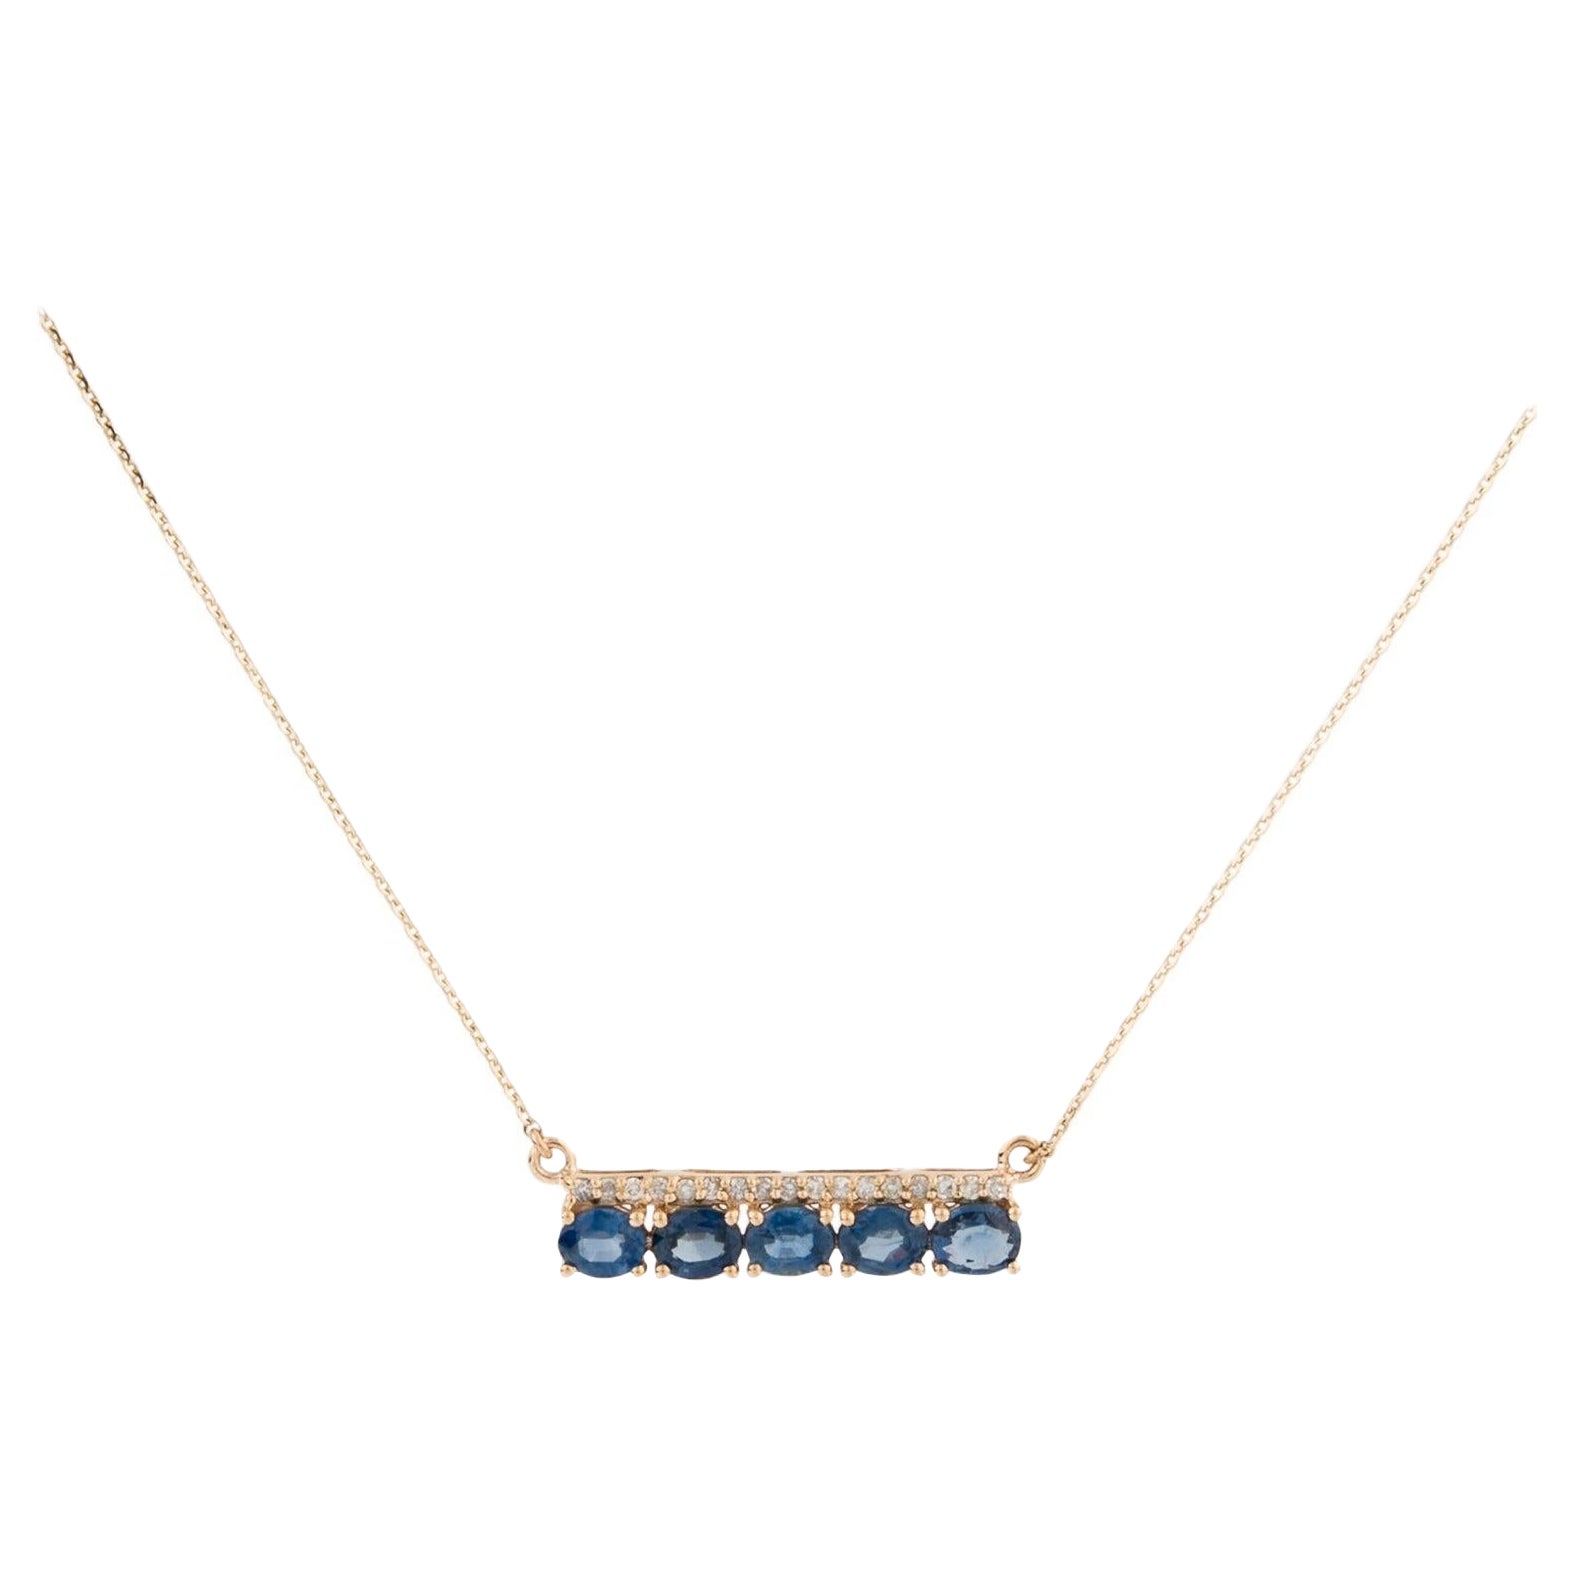 Exquisite 14K Sapphire & Diamond Bar Pendant Necklace - Elegant Gemstone Sparkle For Sale